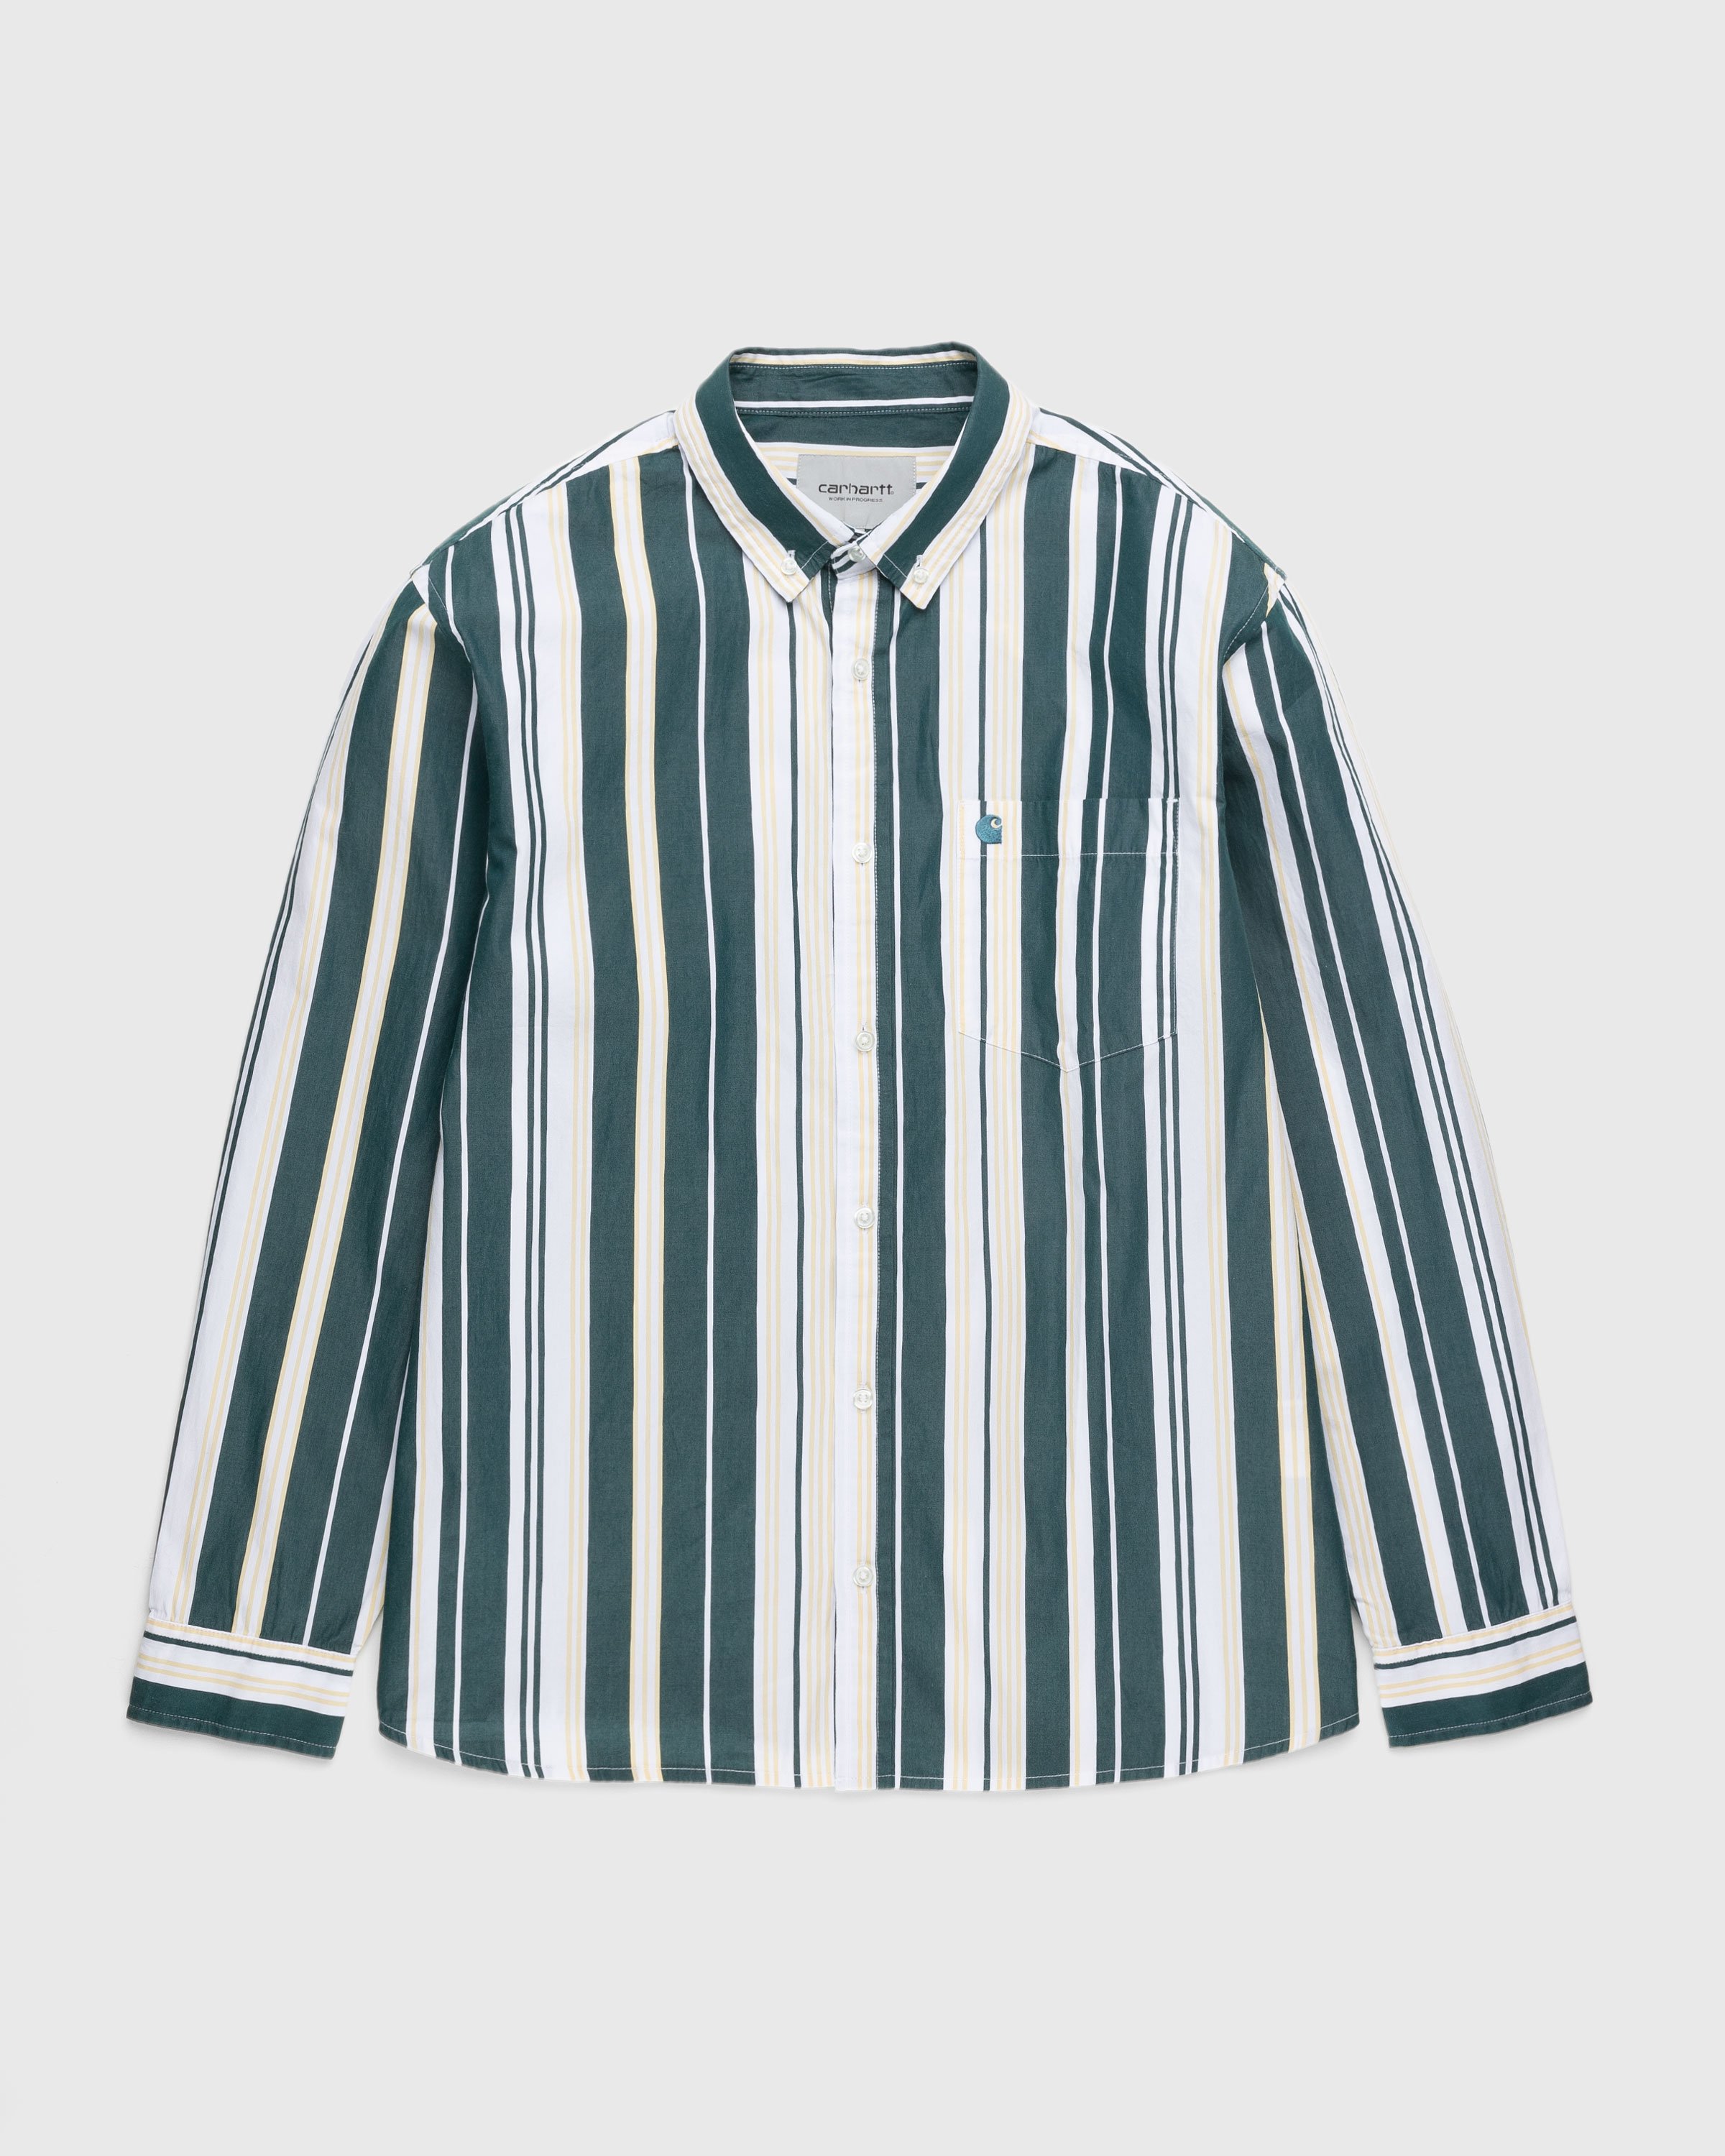 Carhartt WIP - Romero Stripe Shirt Citron/Botanic - Clothing - Blue - Image 1